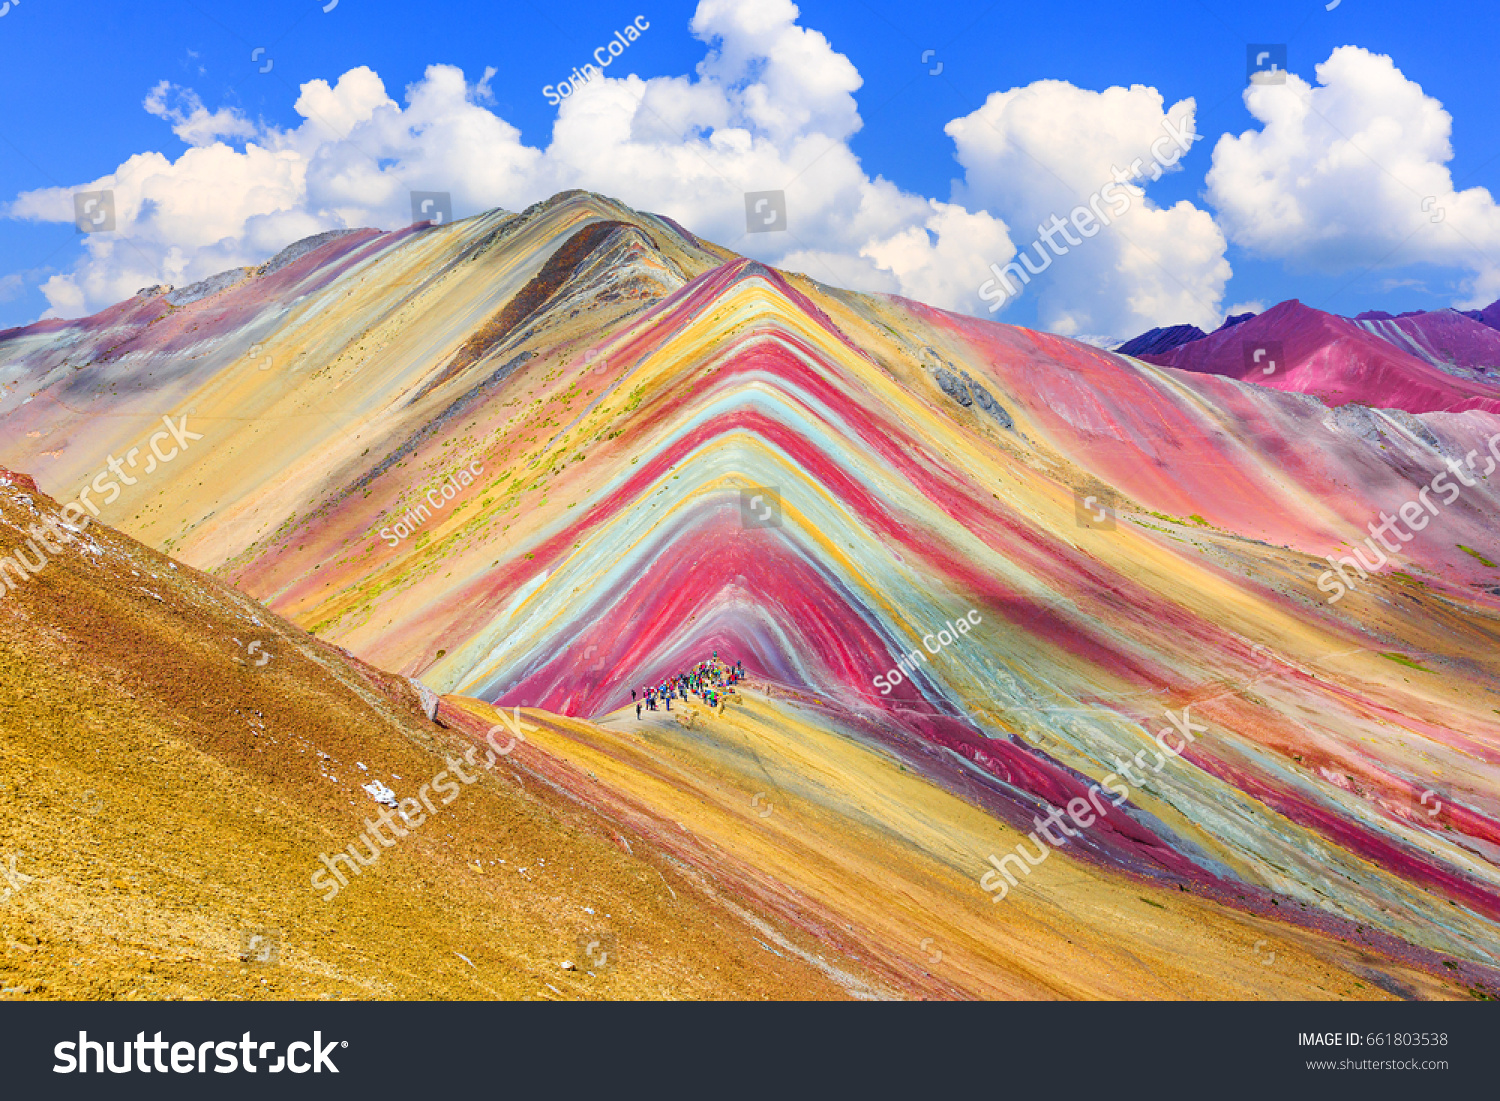 Vinicunca, Cusco Region, Peru. Montana de Siete Colores, or Rainbow Mountain. #661803538